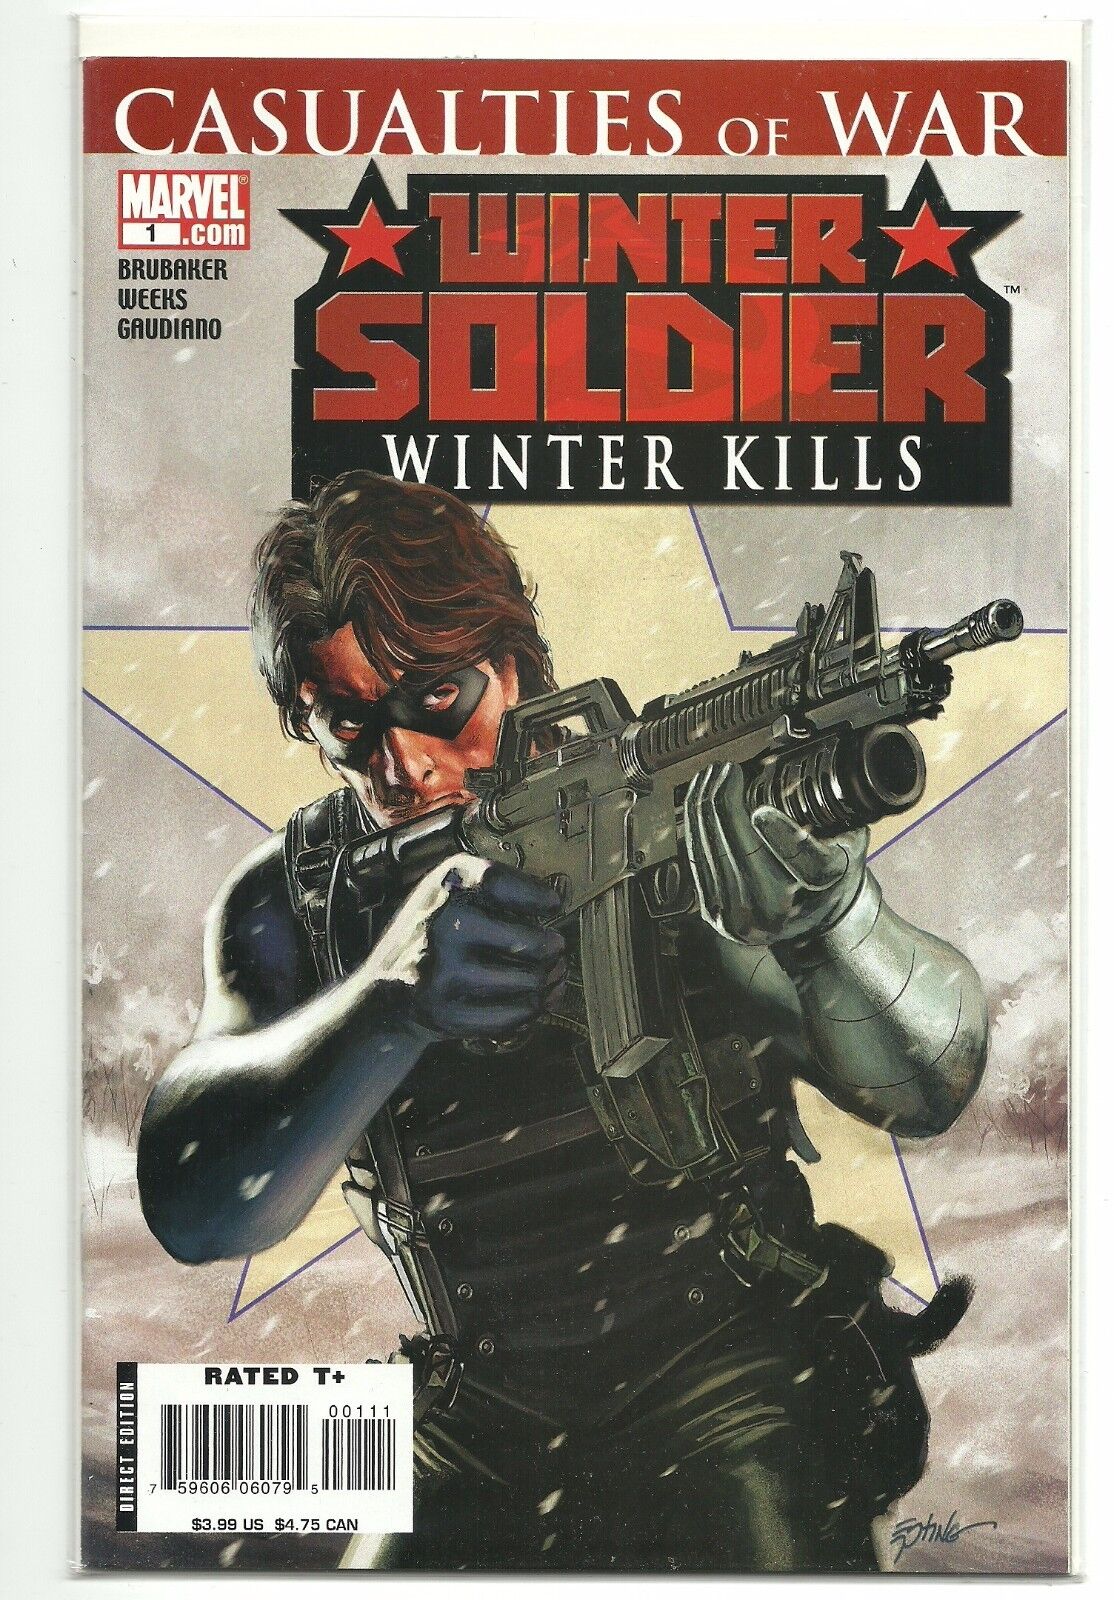 (2006) MARVEL WINTER SOLDIER WINTER KILLS #1 CIVIL WAR ONE SHOT TIE-IN - NM